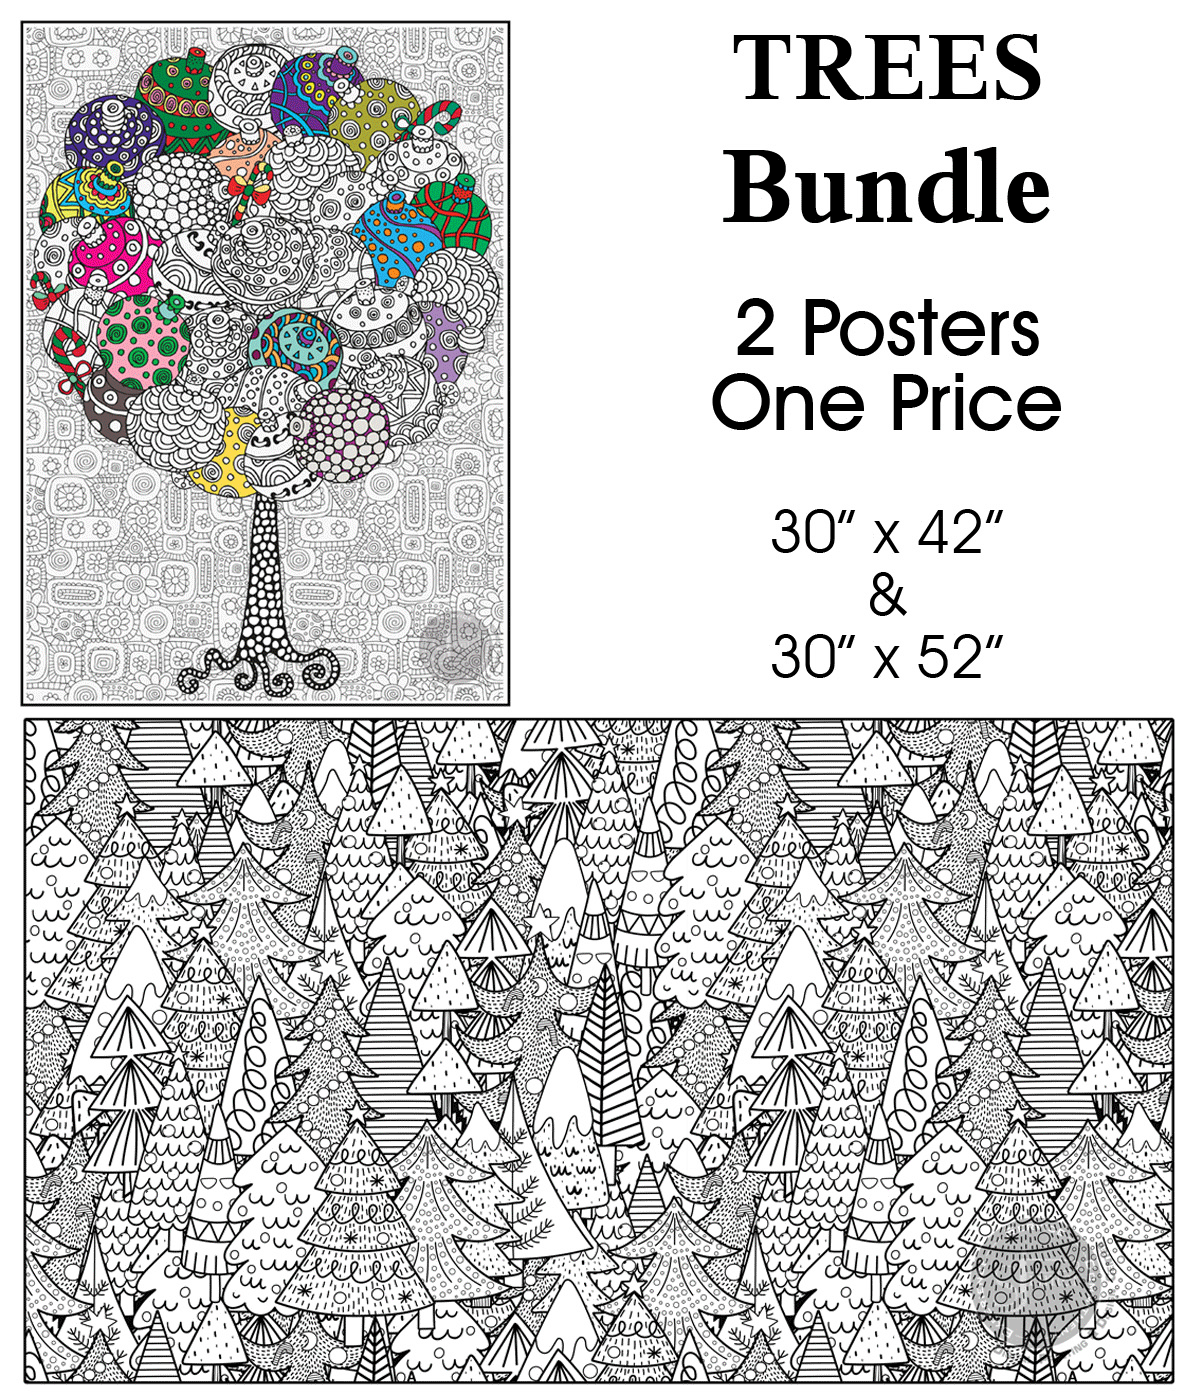 TREES - Bundle of 2 Posters for $50 - SJPrinter 